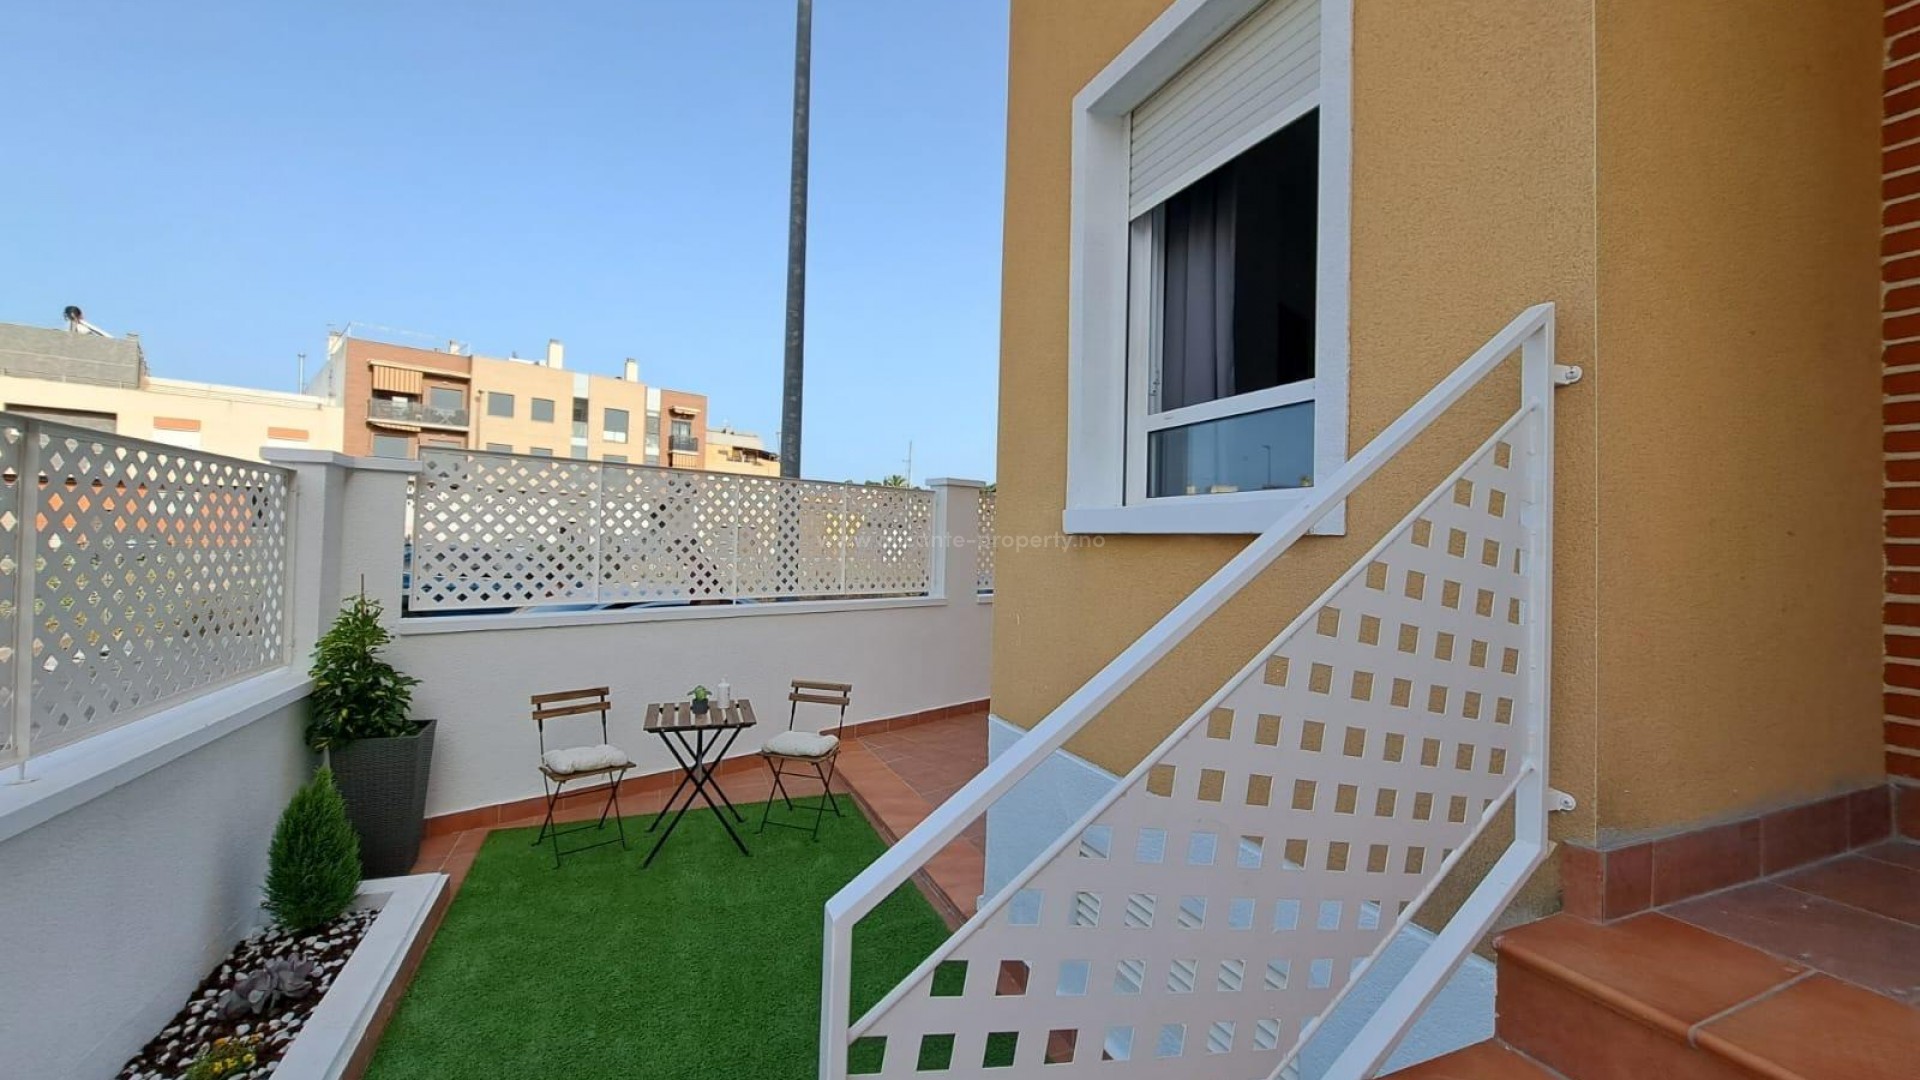 Terraced house/semi-detached house in Bigastro, Vega Baja, 4 bedrooms, 3 bathrooms, private terrace, plus veranda, solarium and closed garage for two cars, shared pool